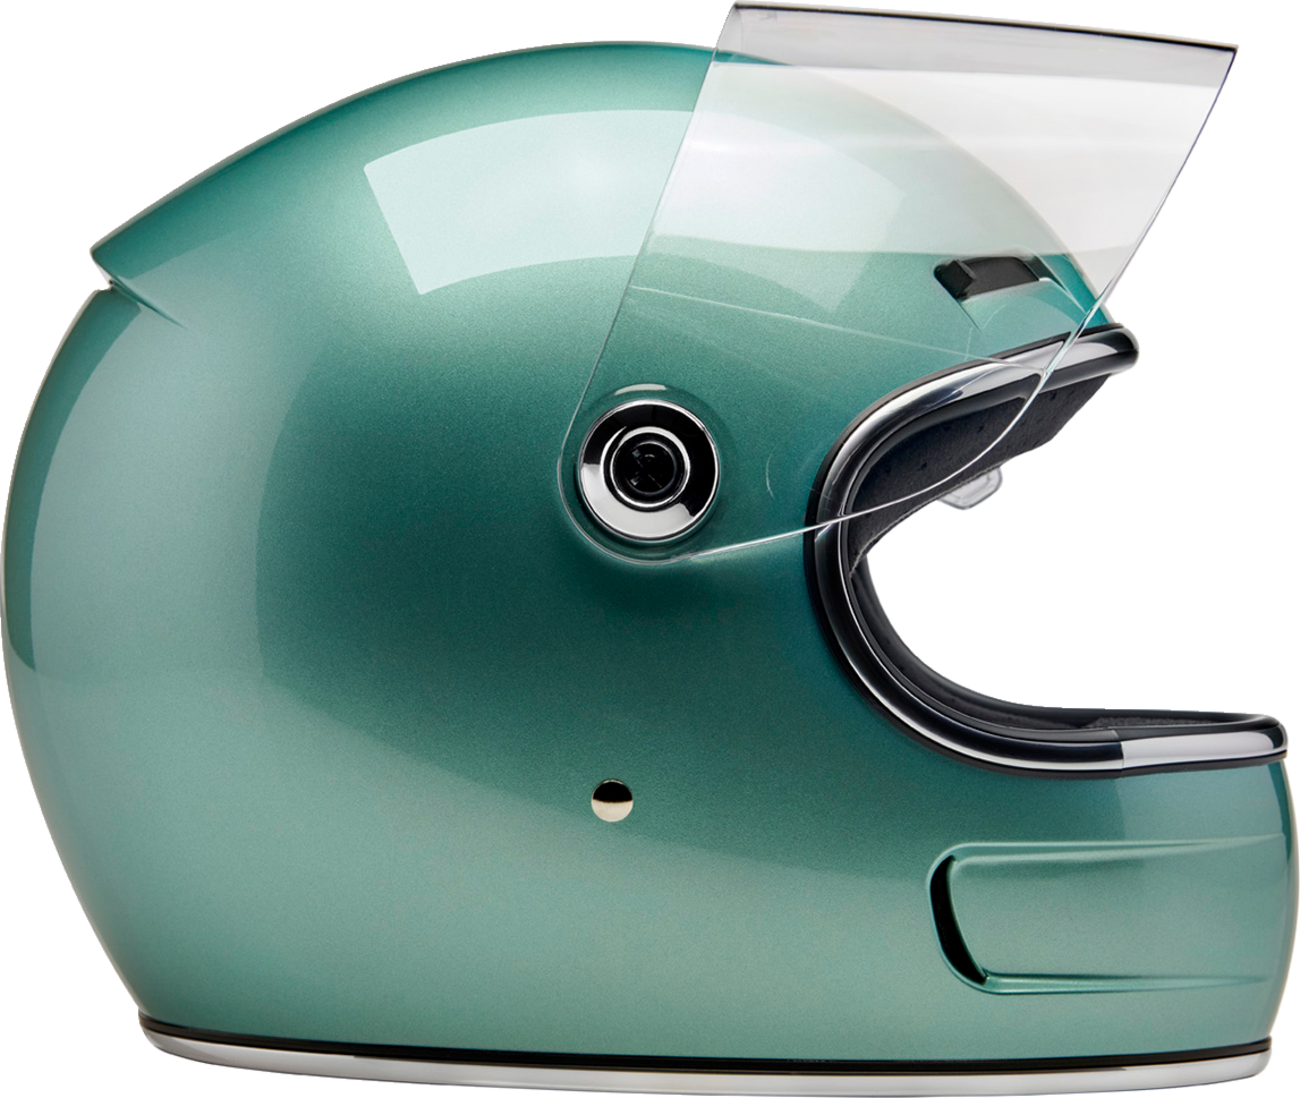 BILTWELL Gringo SV Helmet - Metallic Seafoam - XL 1006-313-505